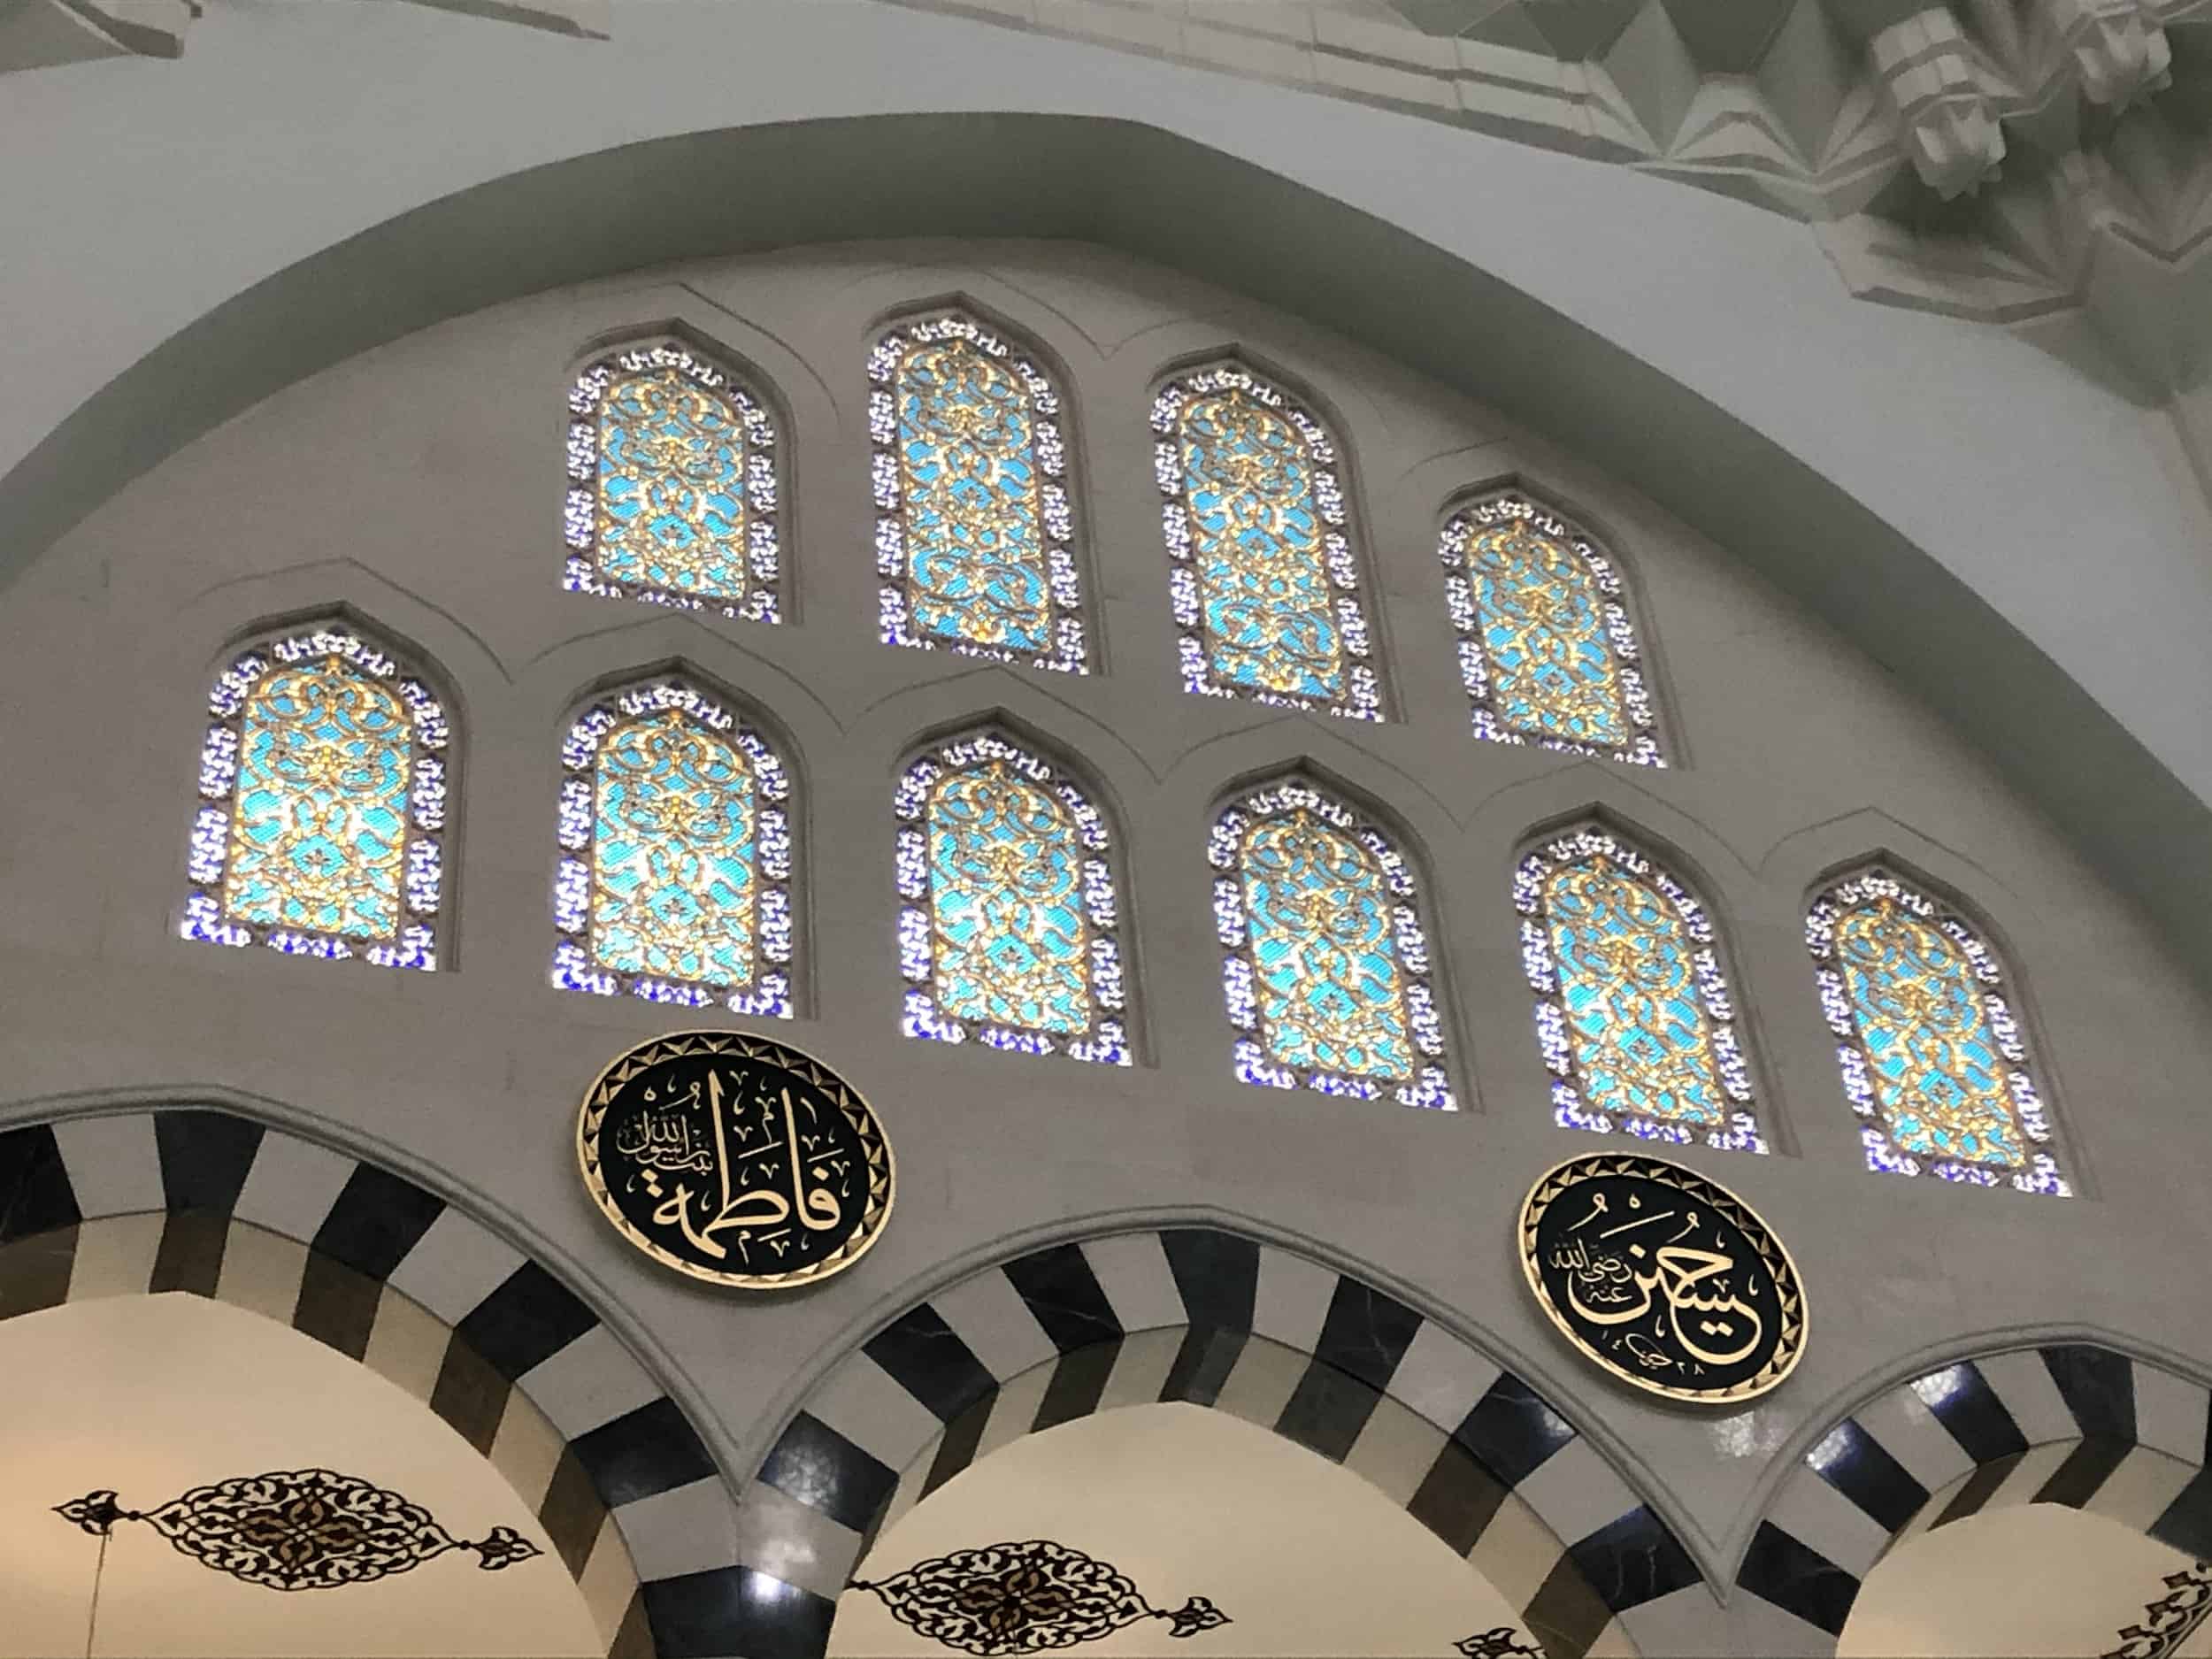 Windows of the Melike Hatun Mosque